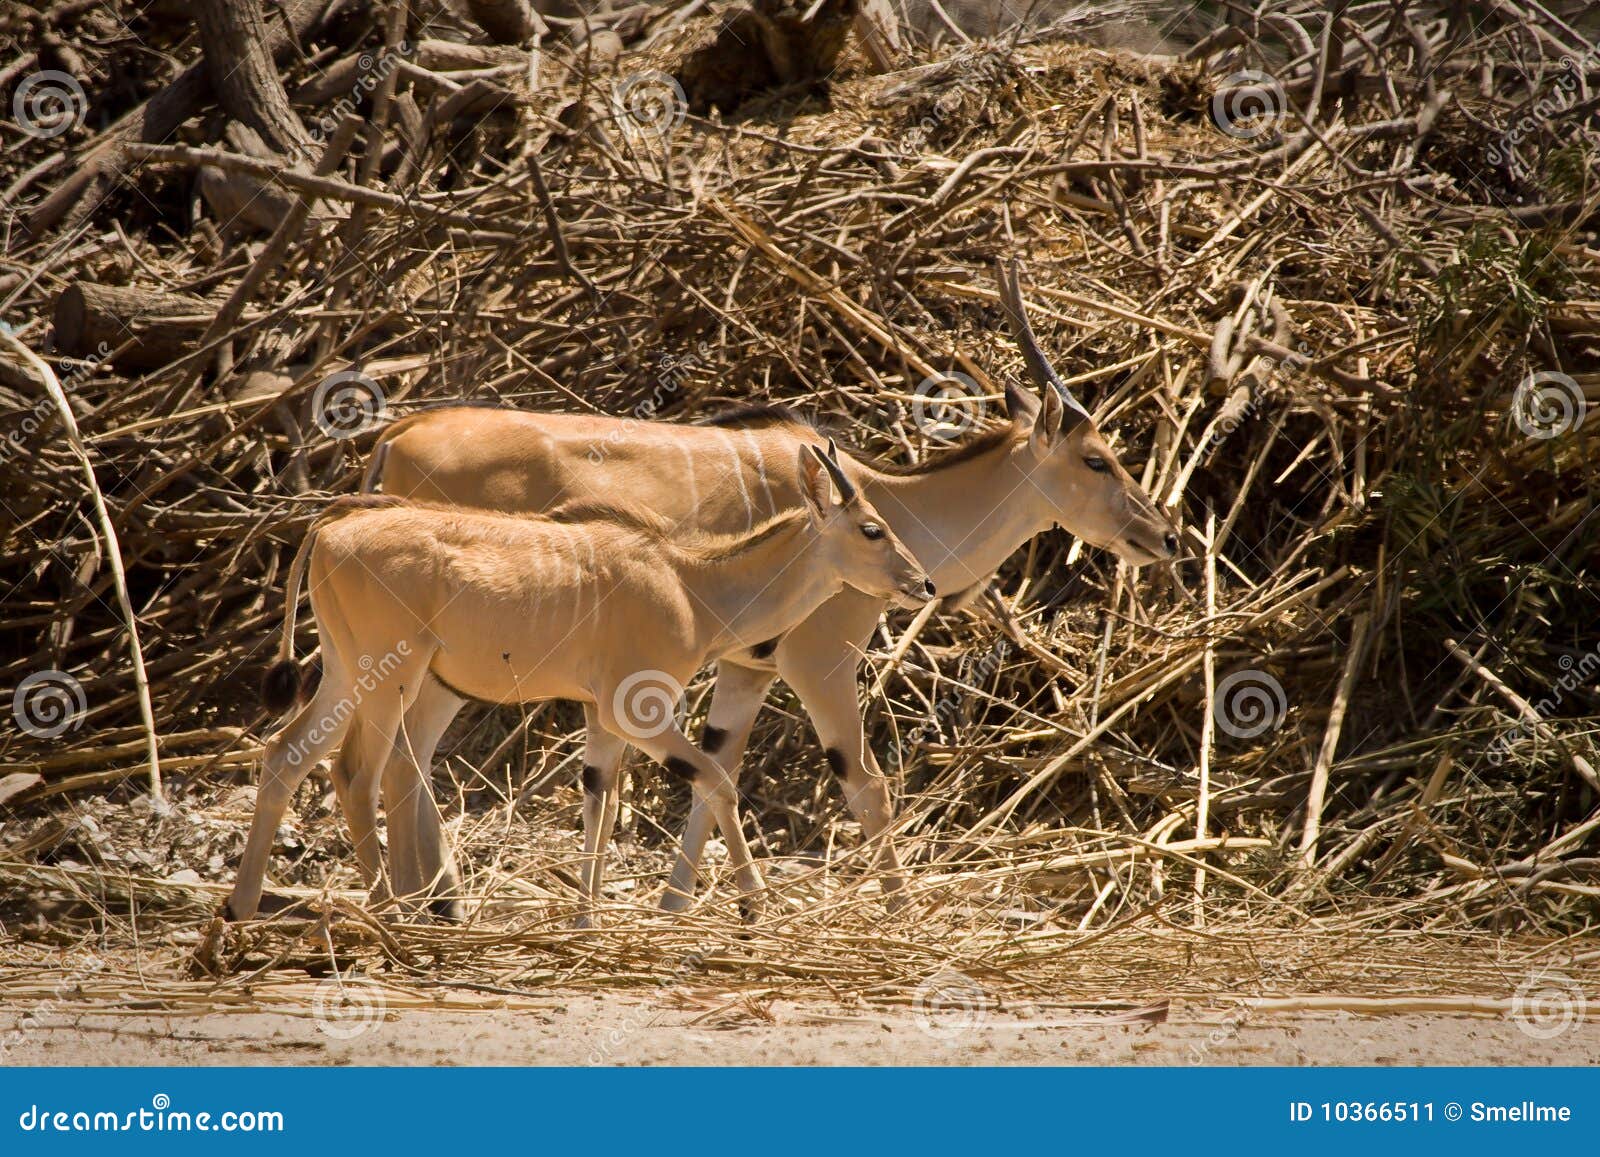 eland antelope calf